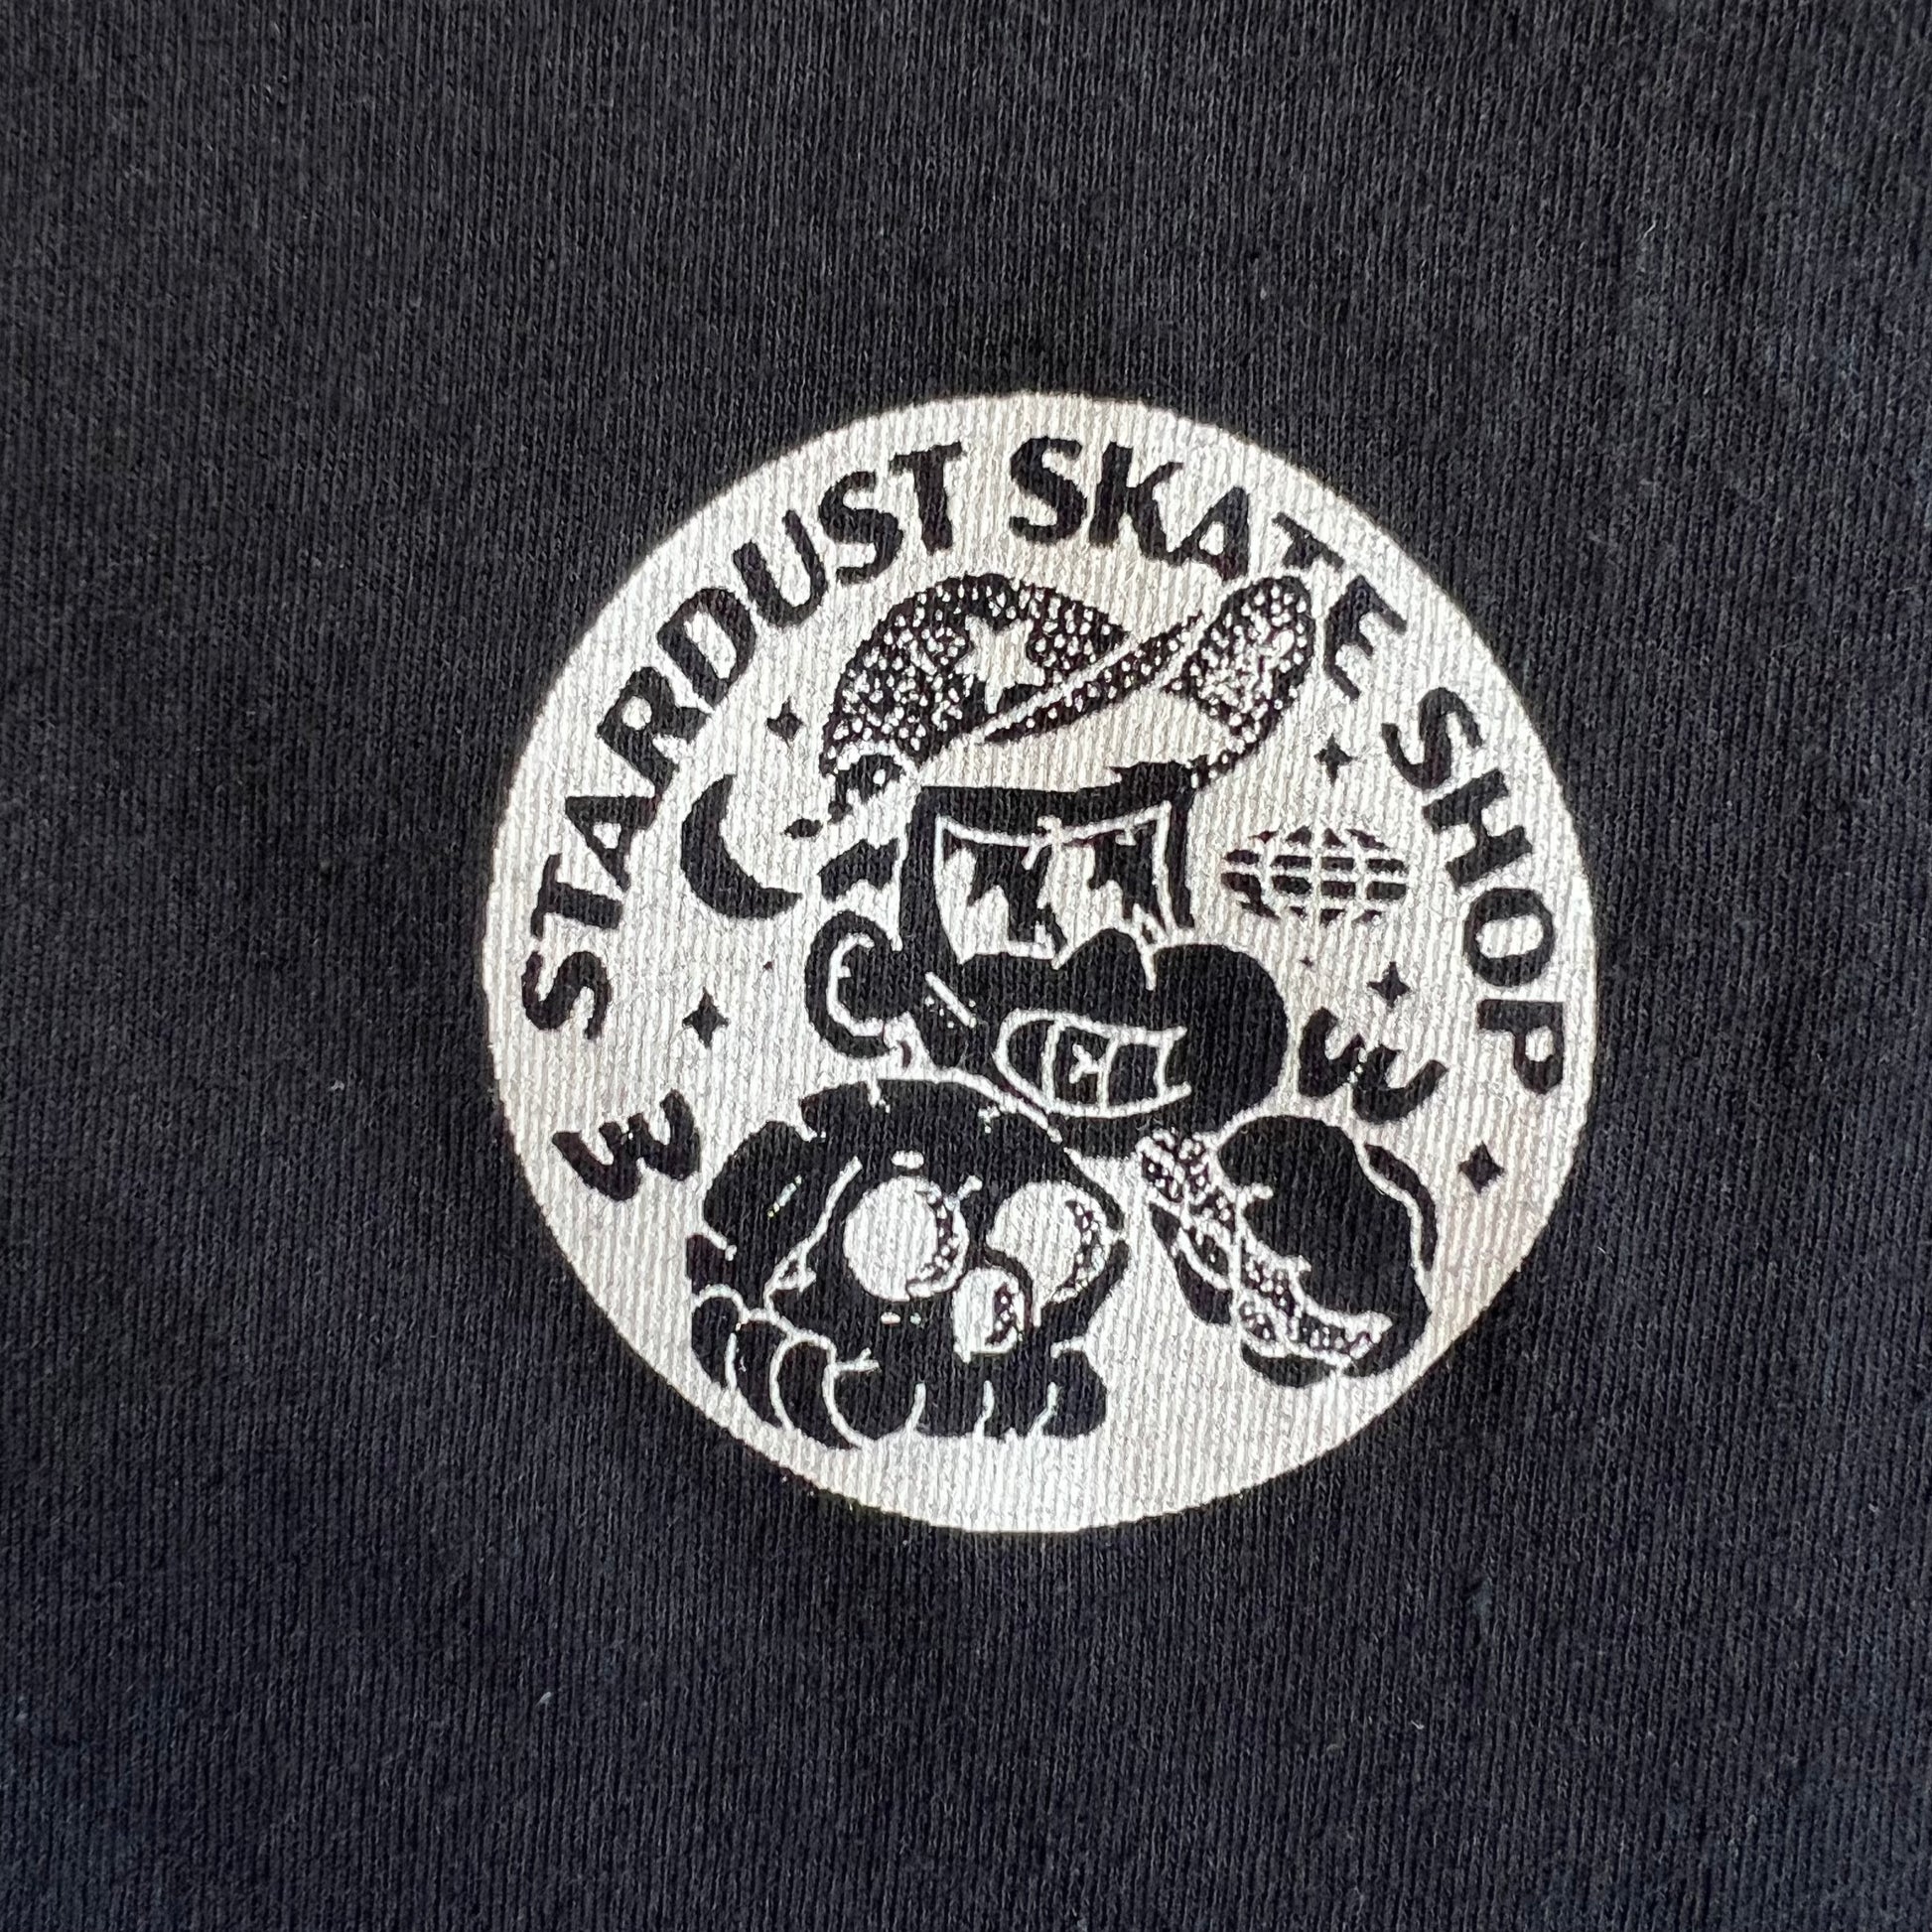 Stardust Skate Shop Tee 011 Black / White